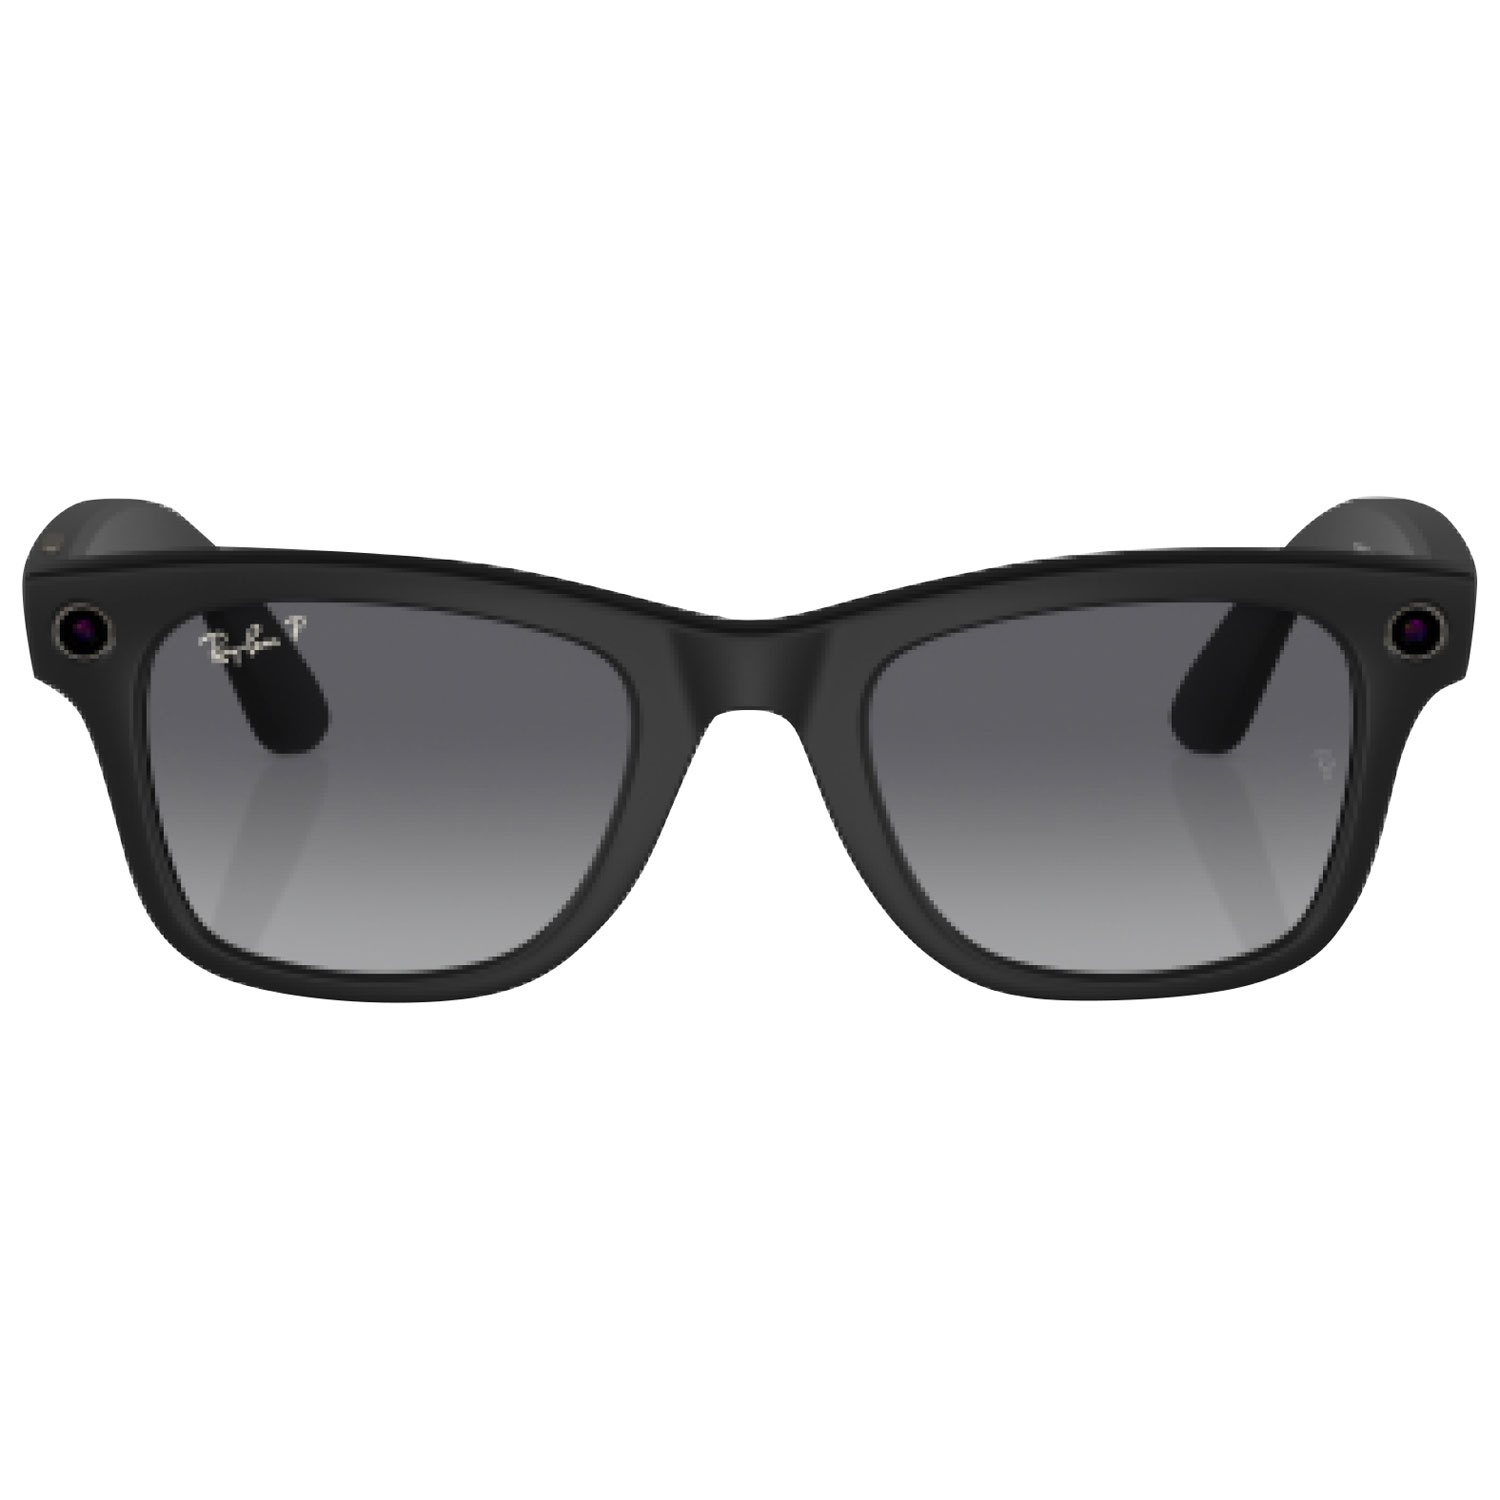 Ray-Ban | Meta Wayfarer Smart Glasses with AI, Photo, Video, Audio & Messaging - Matte Black/Polarized Gradient Graphite - Large